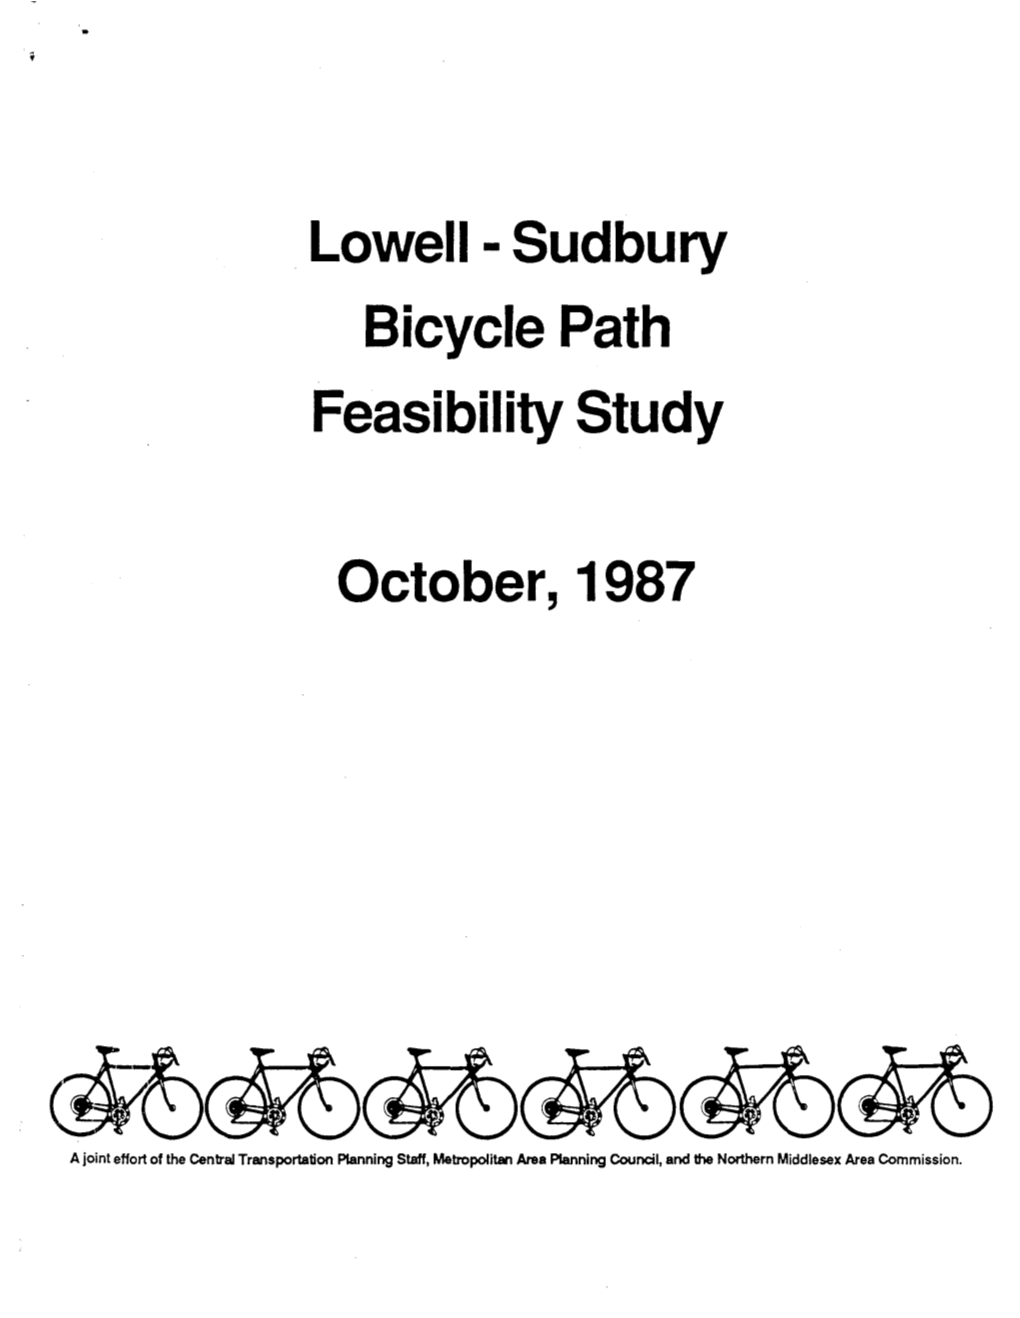 Lowell-Sudbury Bicycle Path Study